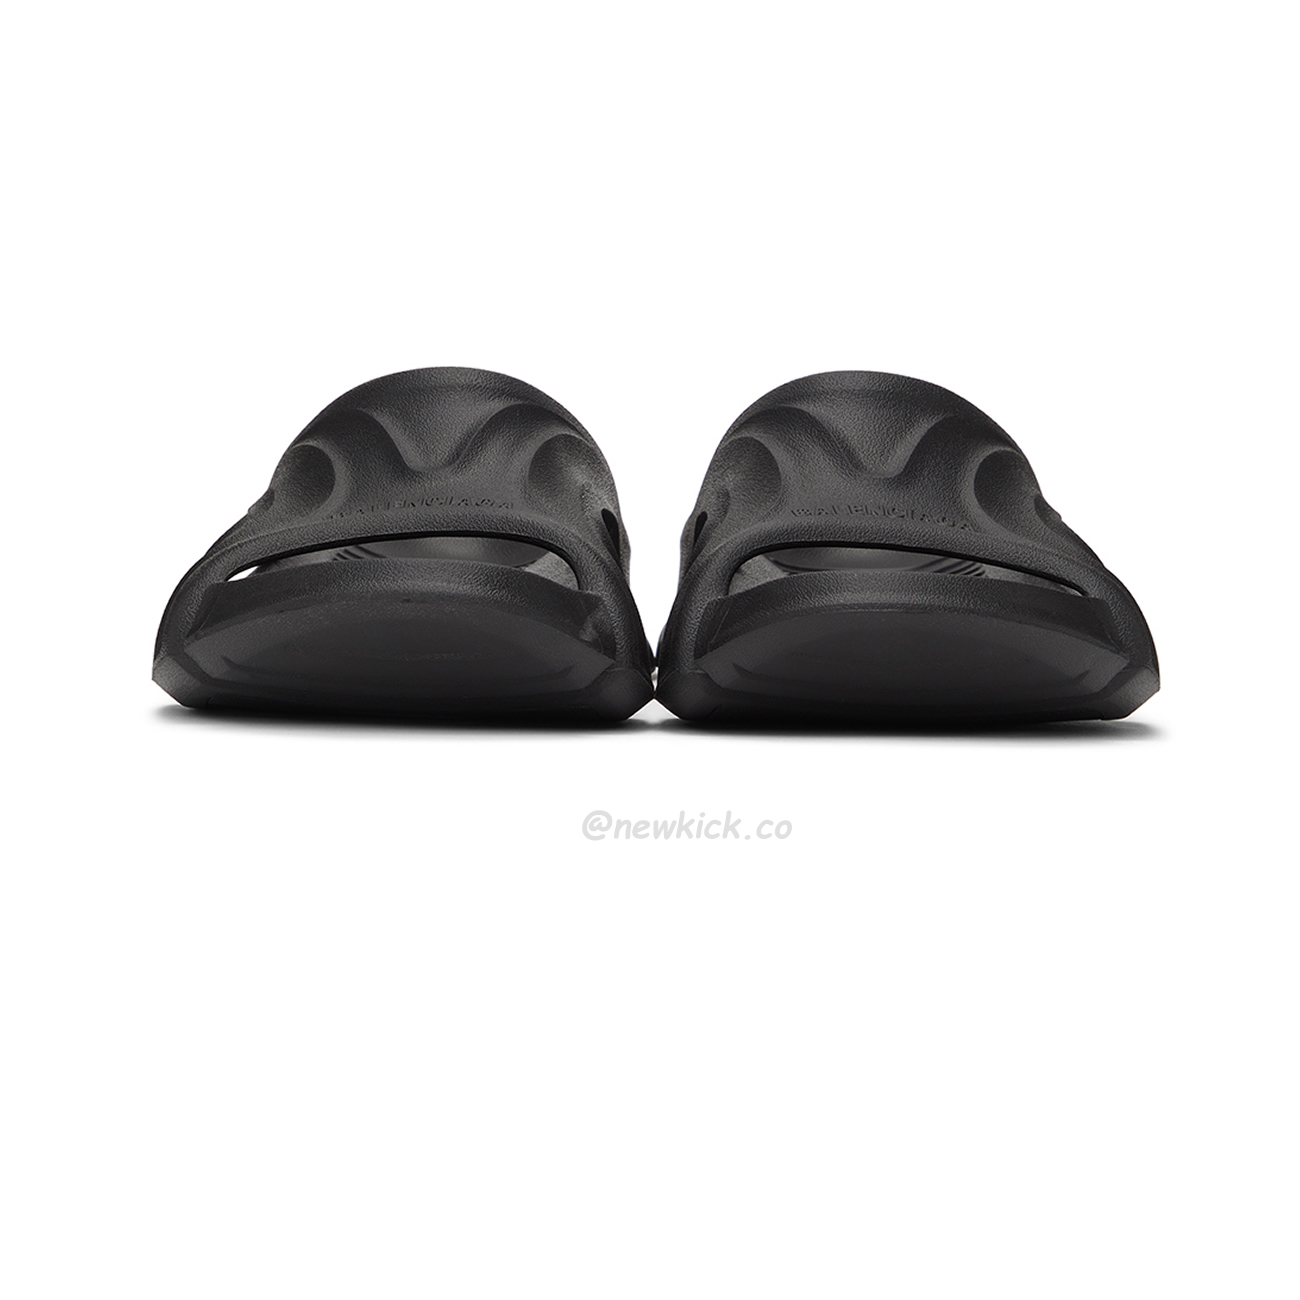 Balenciaga Mold Slide Sandal Black Beige 653874w3ce21000 (13) - newkick.org